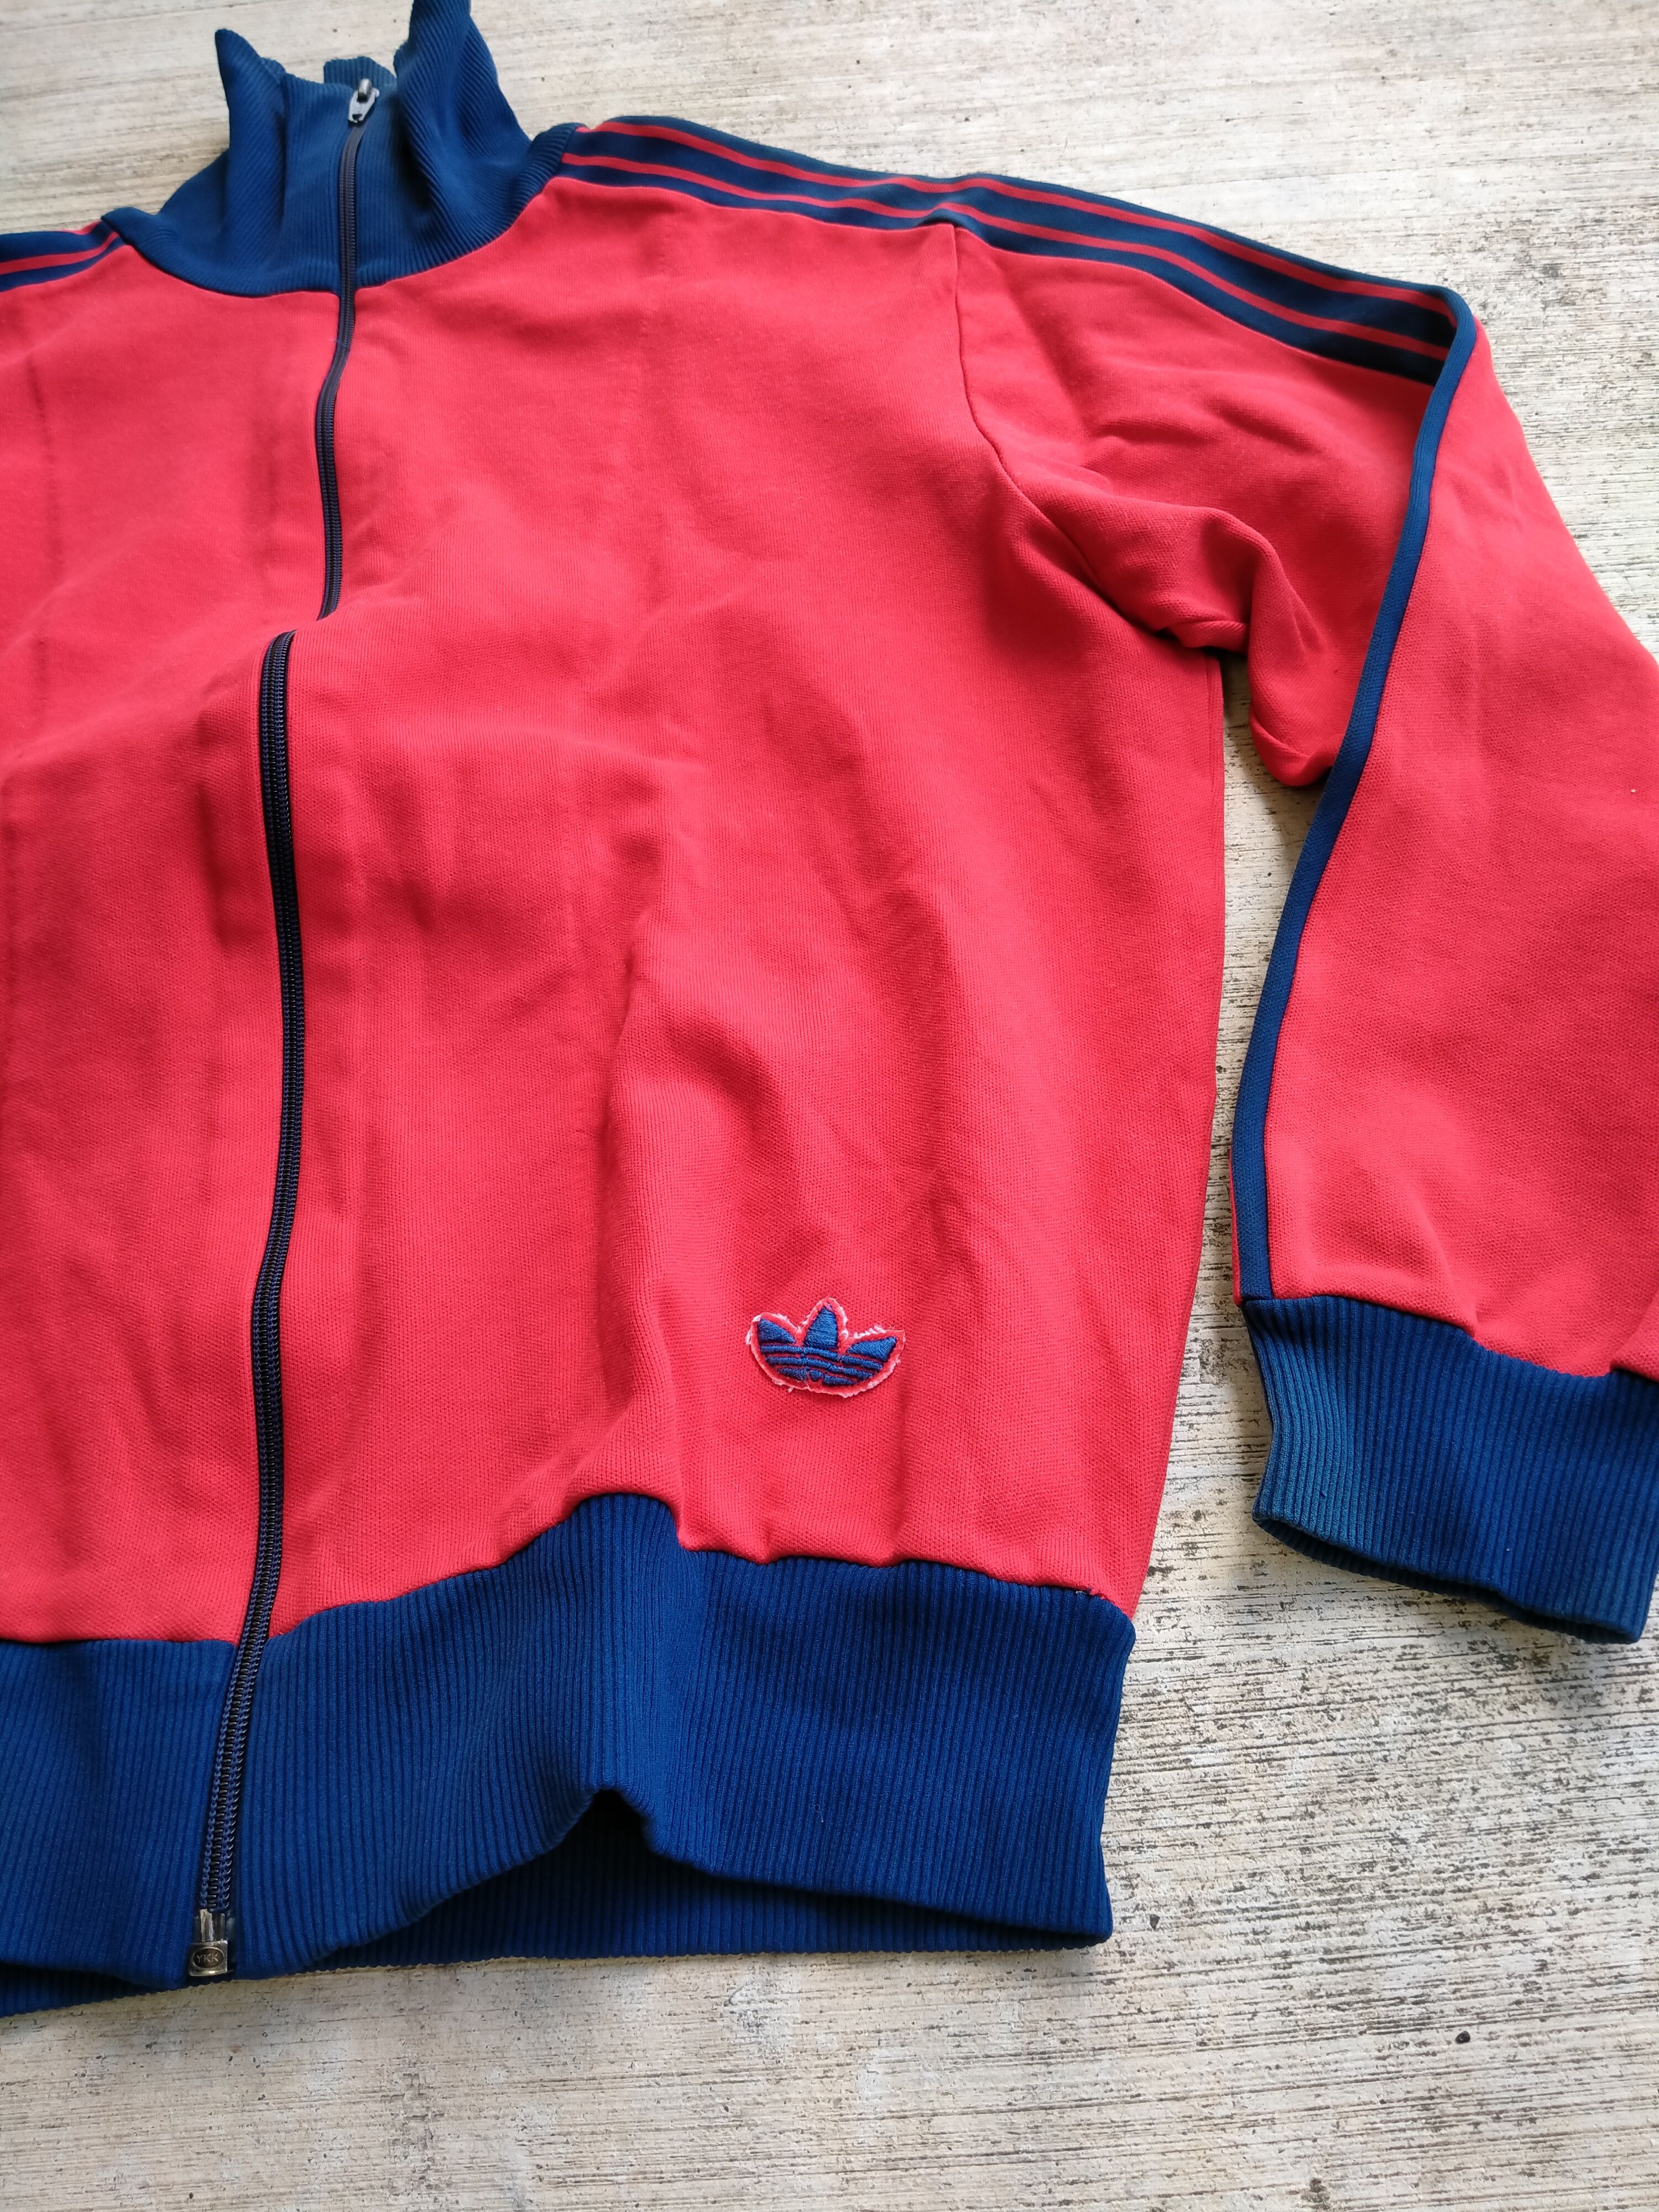 Adidas Rare Adidas Vintage 80s Red x Blue Tracktop Size US M / EU 48-50 / 2 - 3 Thumbnail